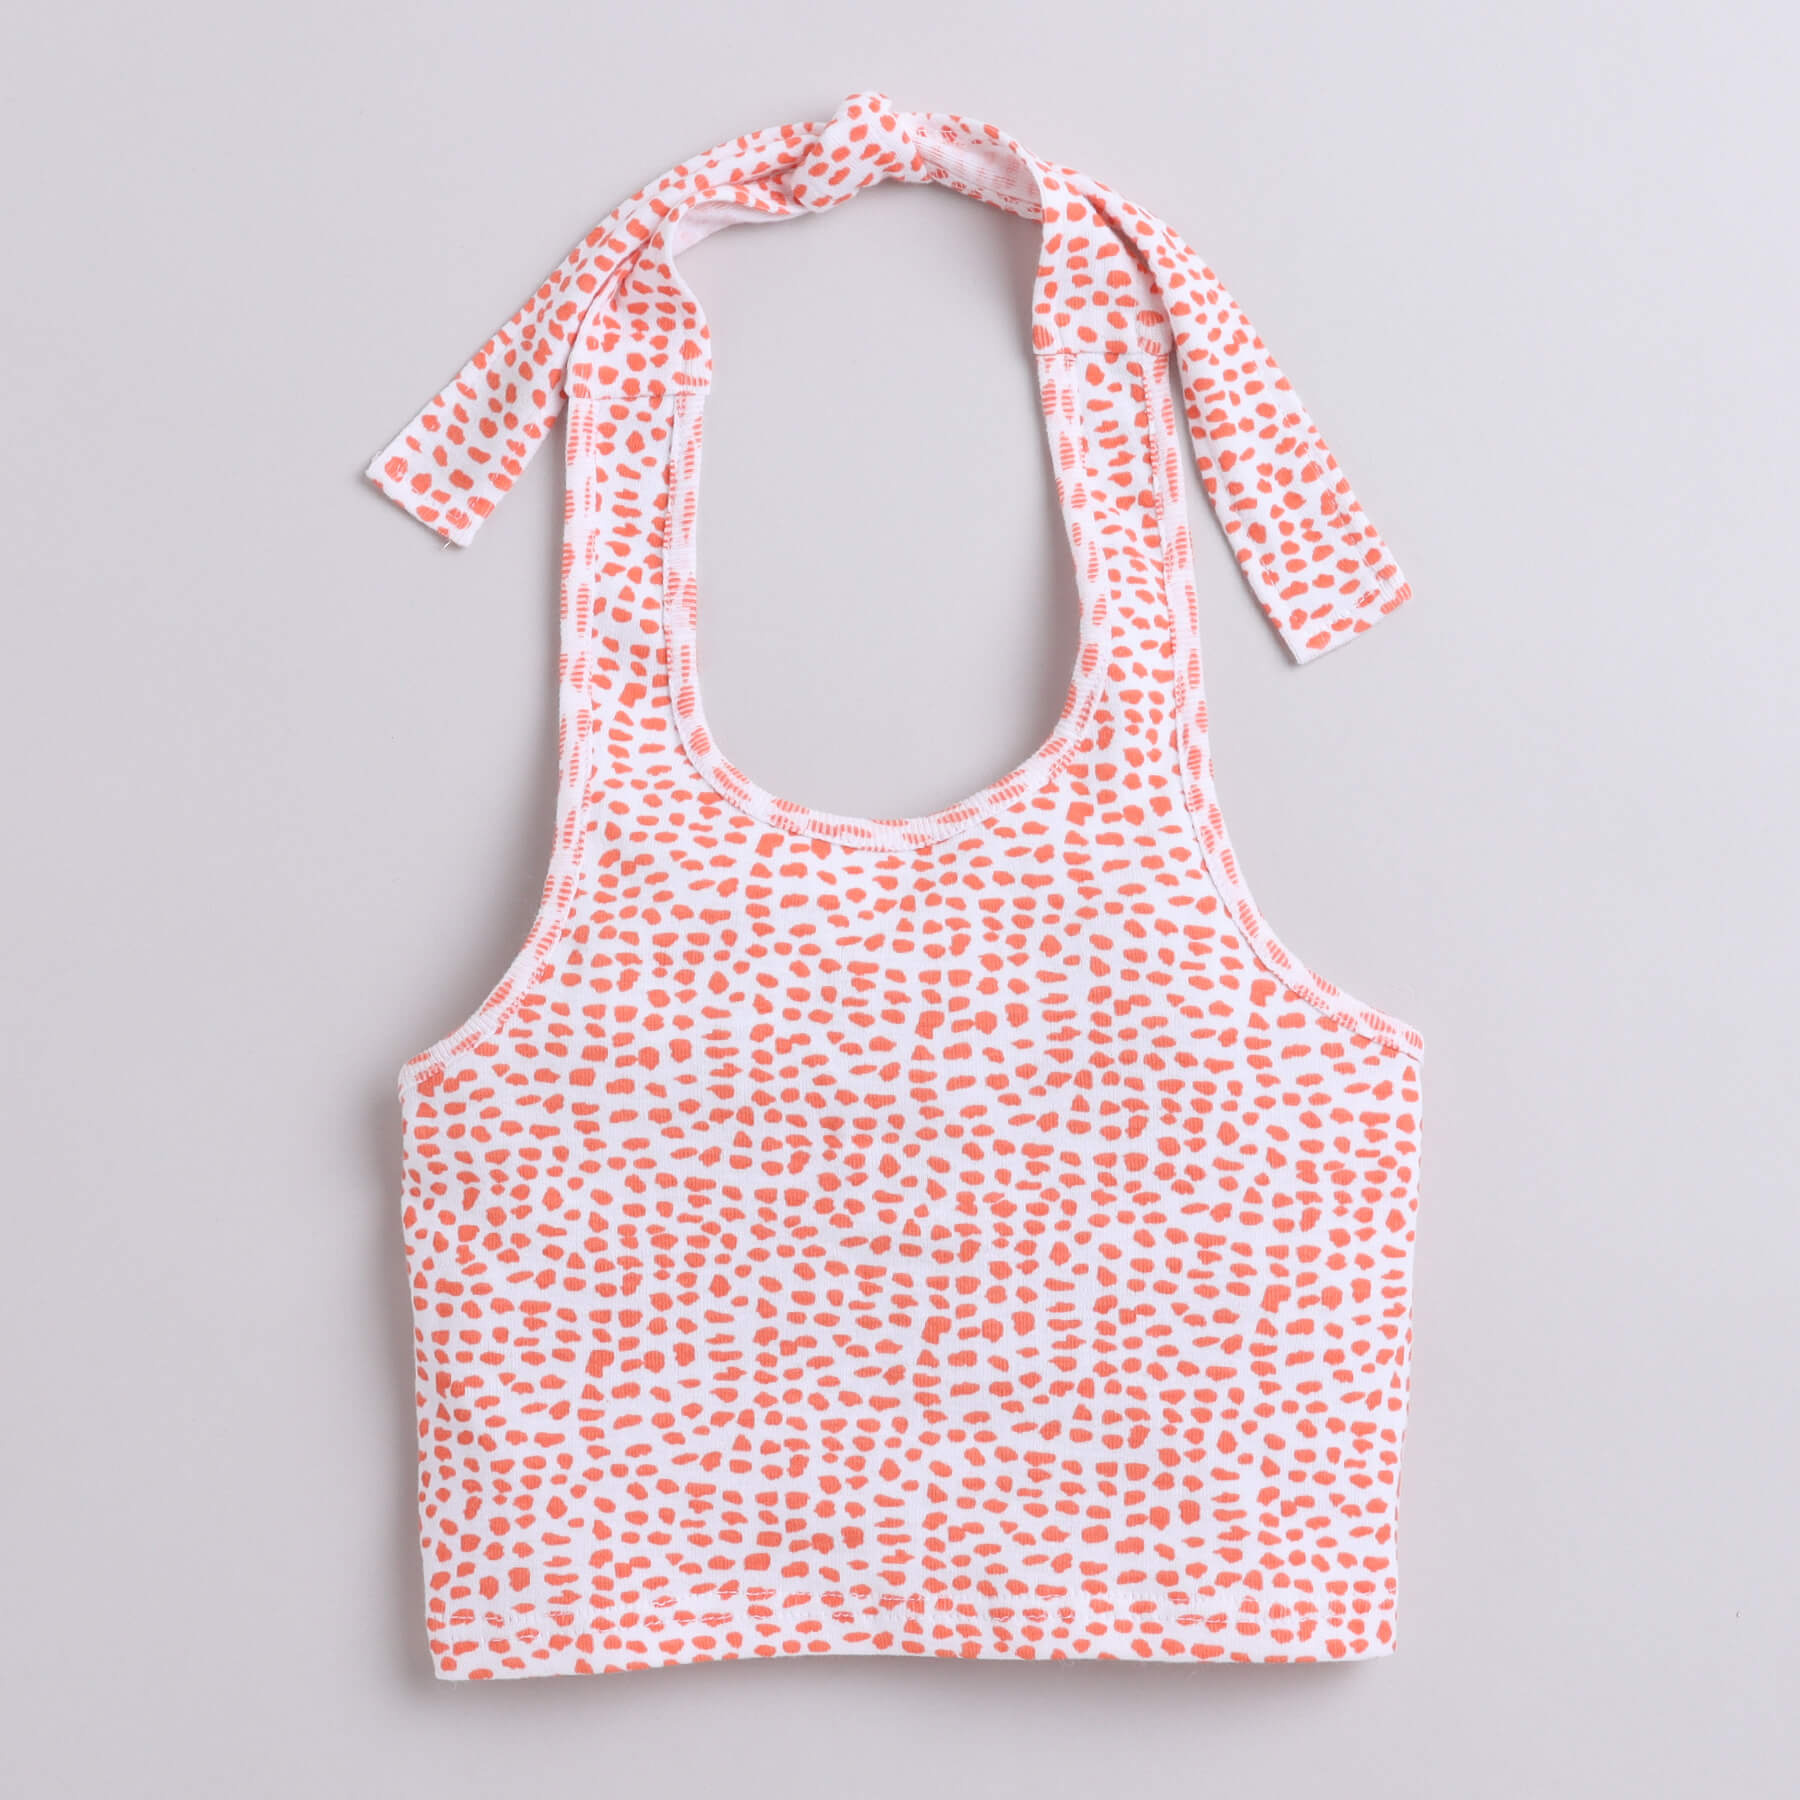 Taffykids 100% cotton polka dots printed halter neck crop top and shorts set-Orange/white